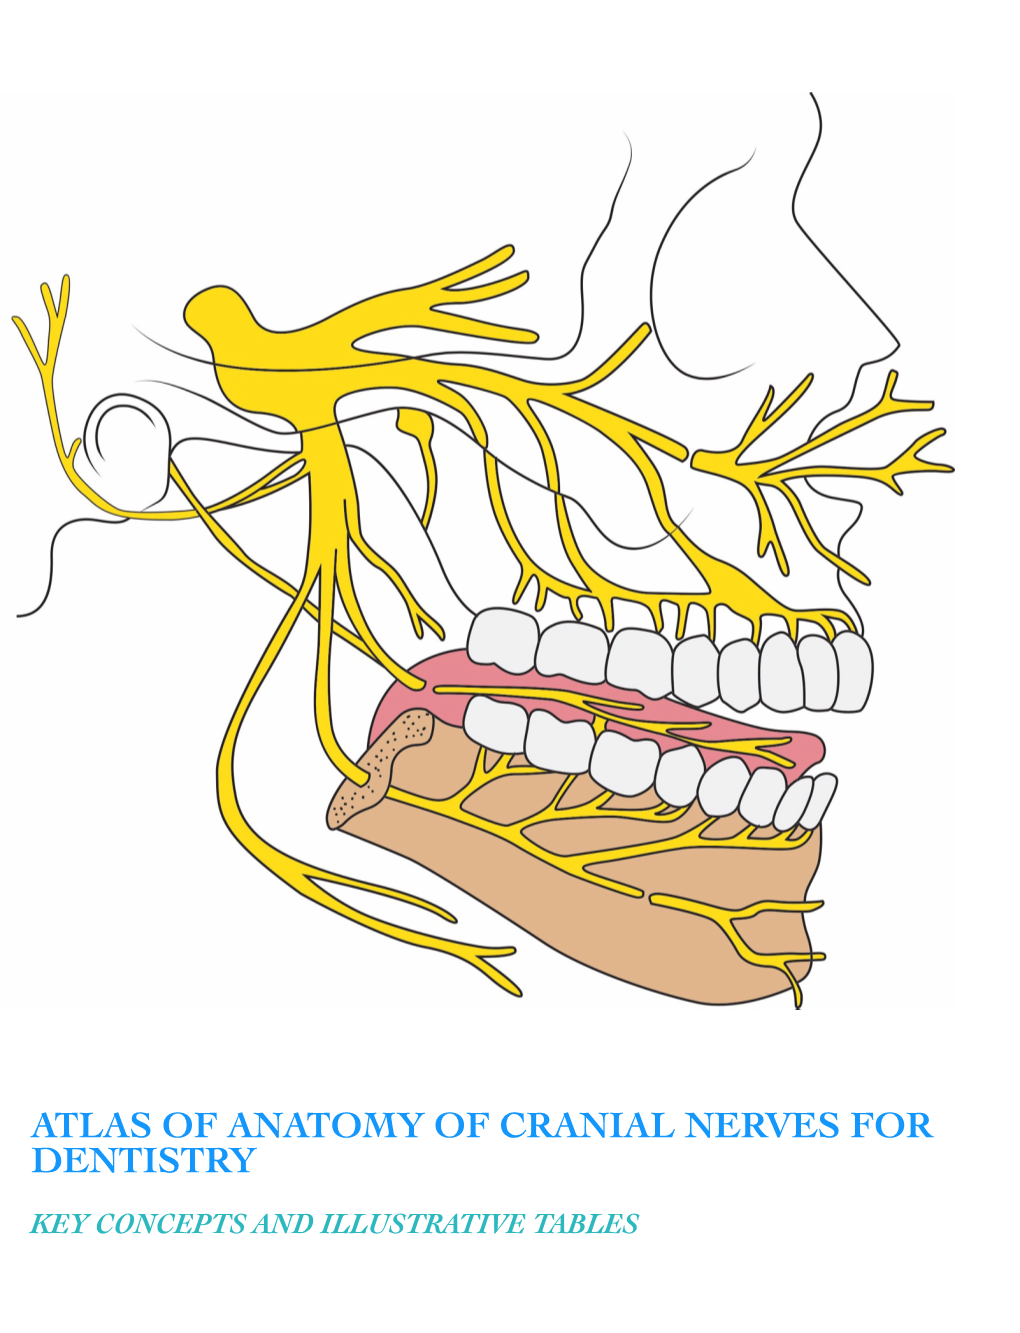 Atlas of Anatomy of Cranial Nerves for Dentistry